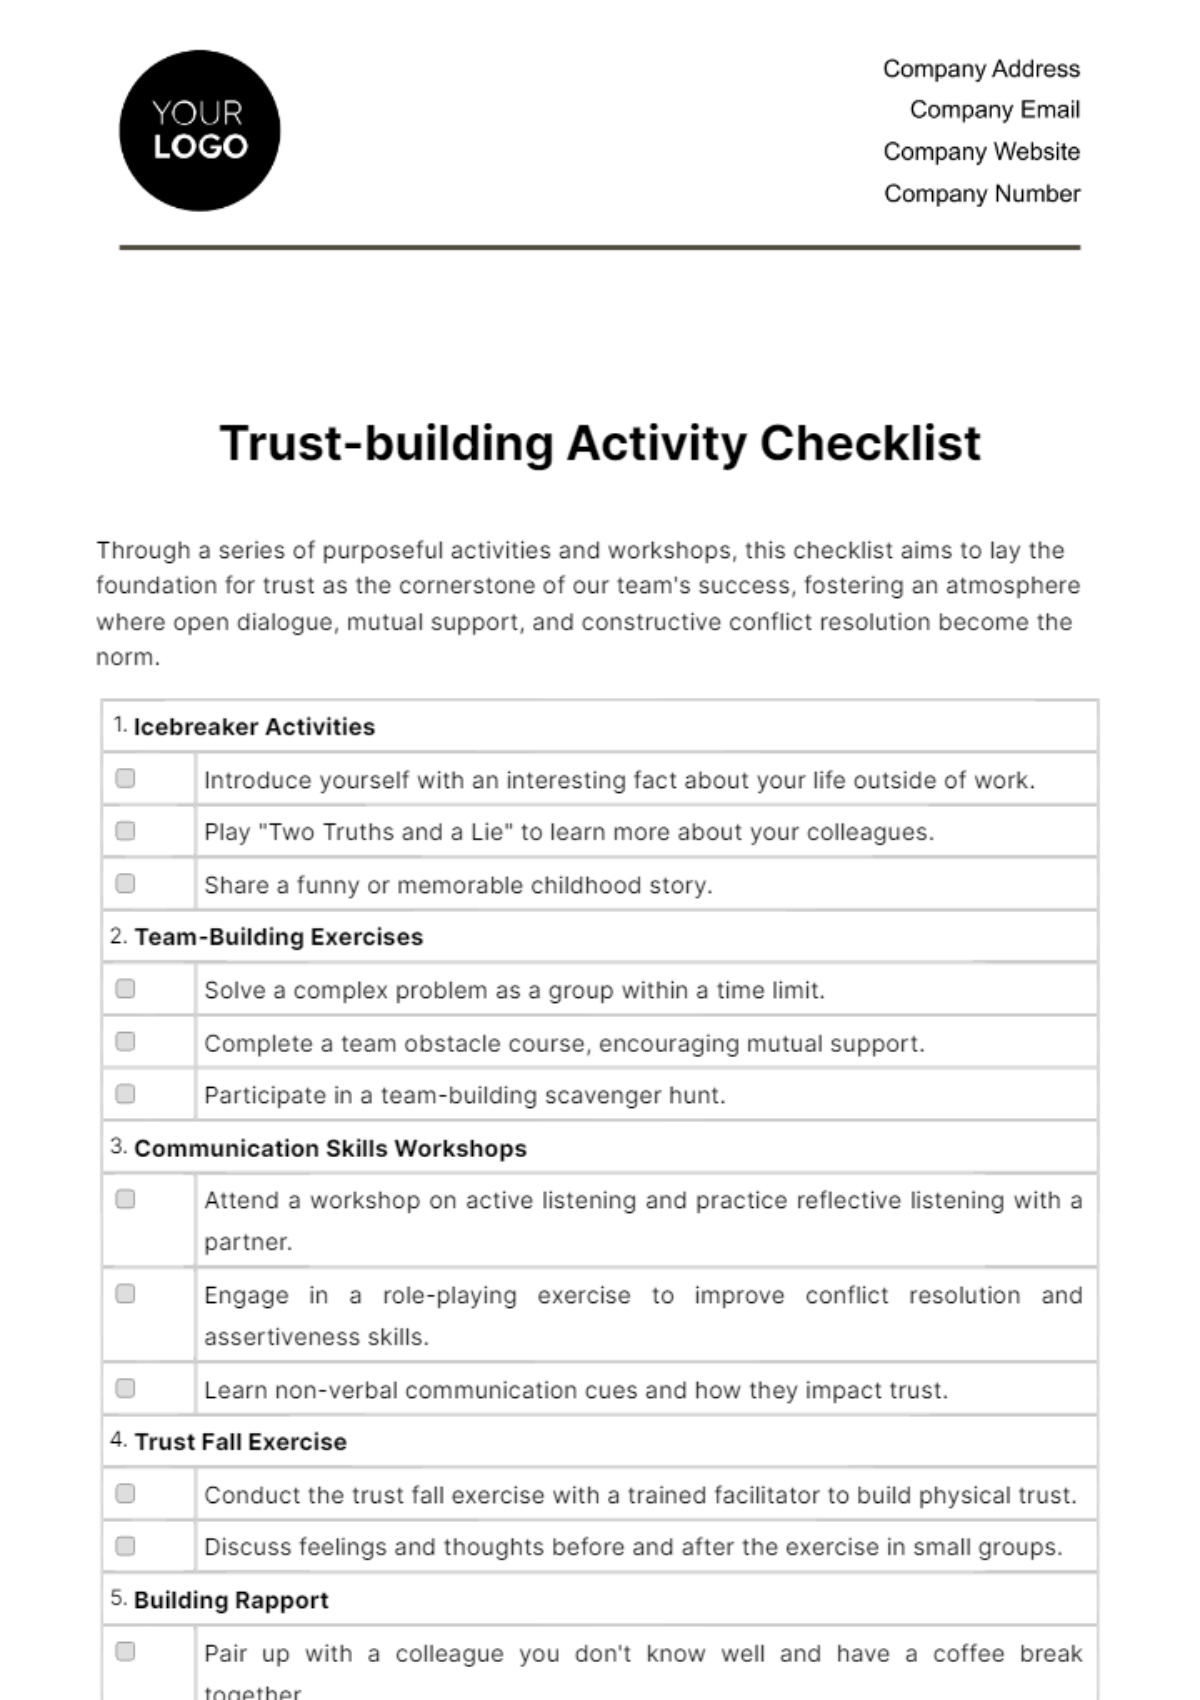 Free Trust-building Activity Checklist HR Template